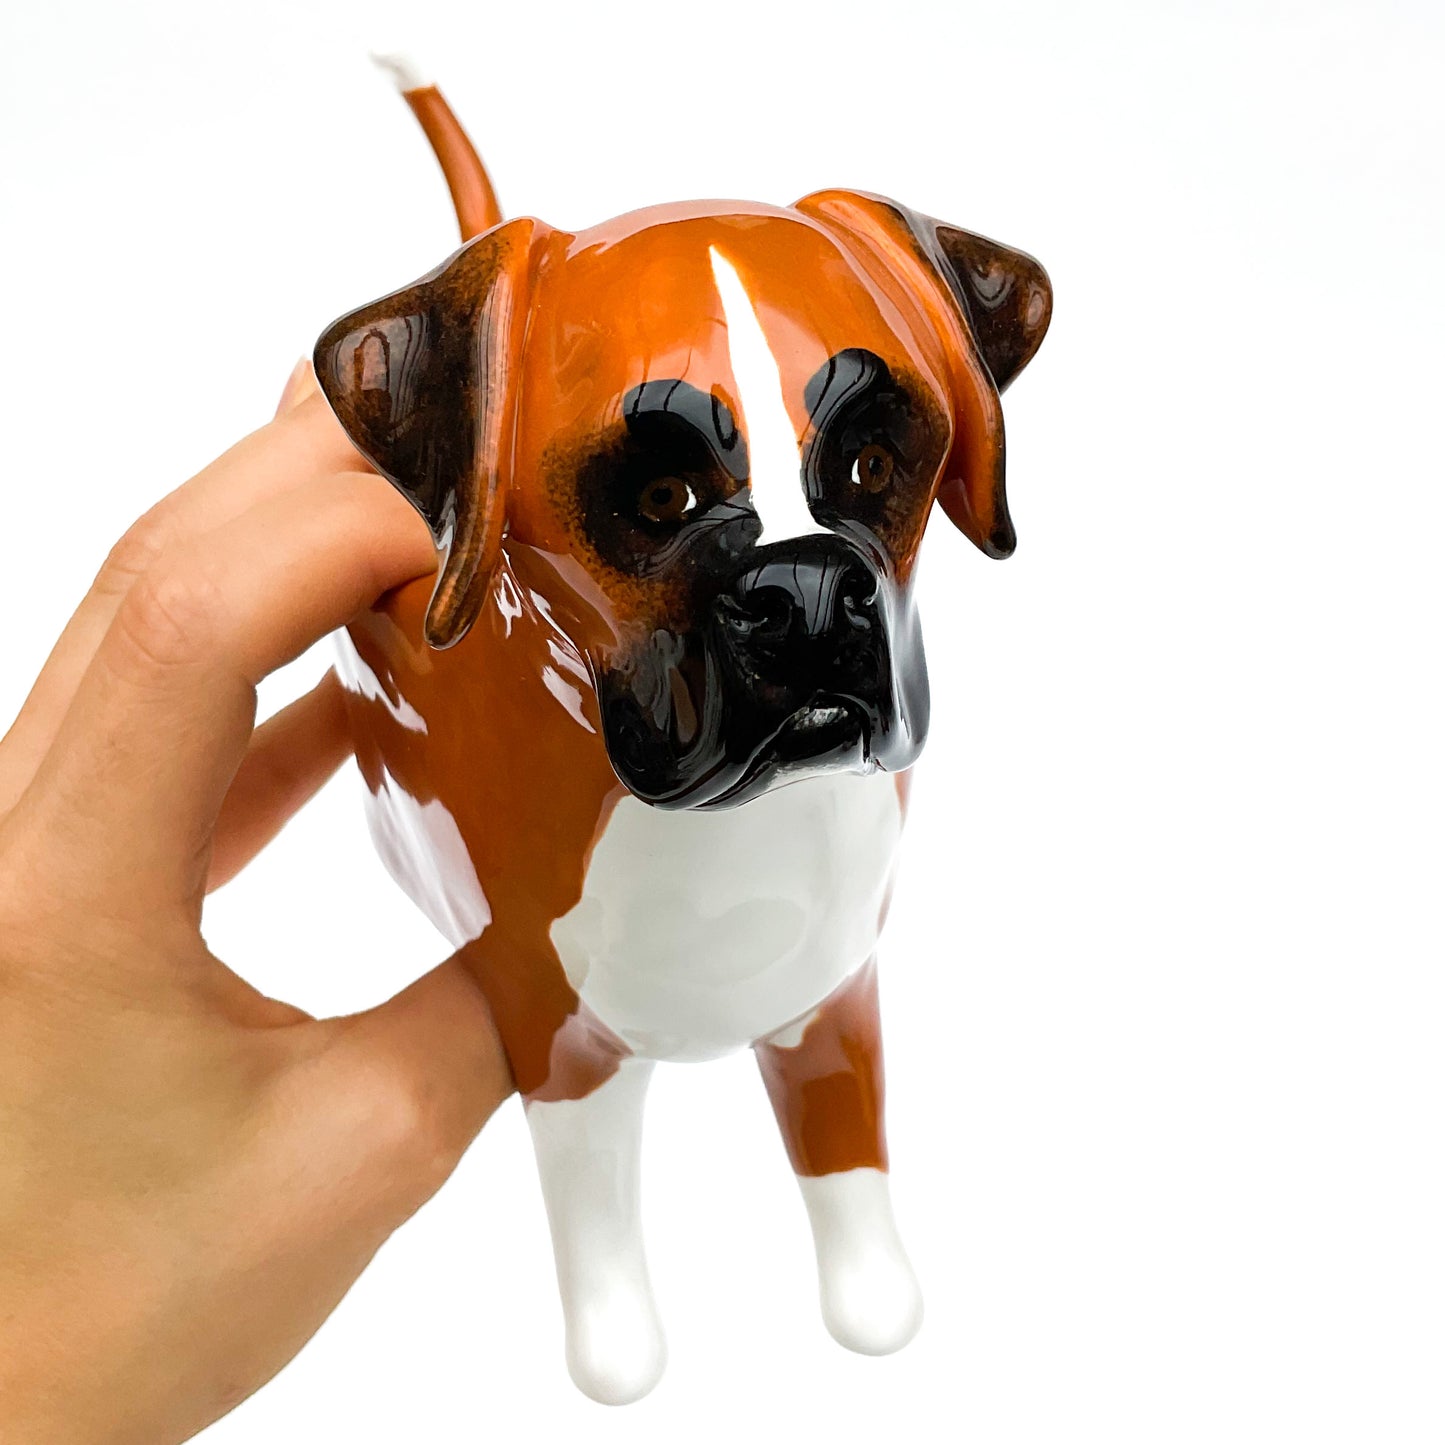 Boxer Dog Planter - Ceramic Dog Plant Pot